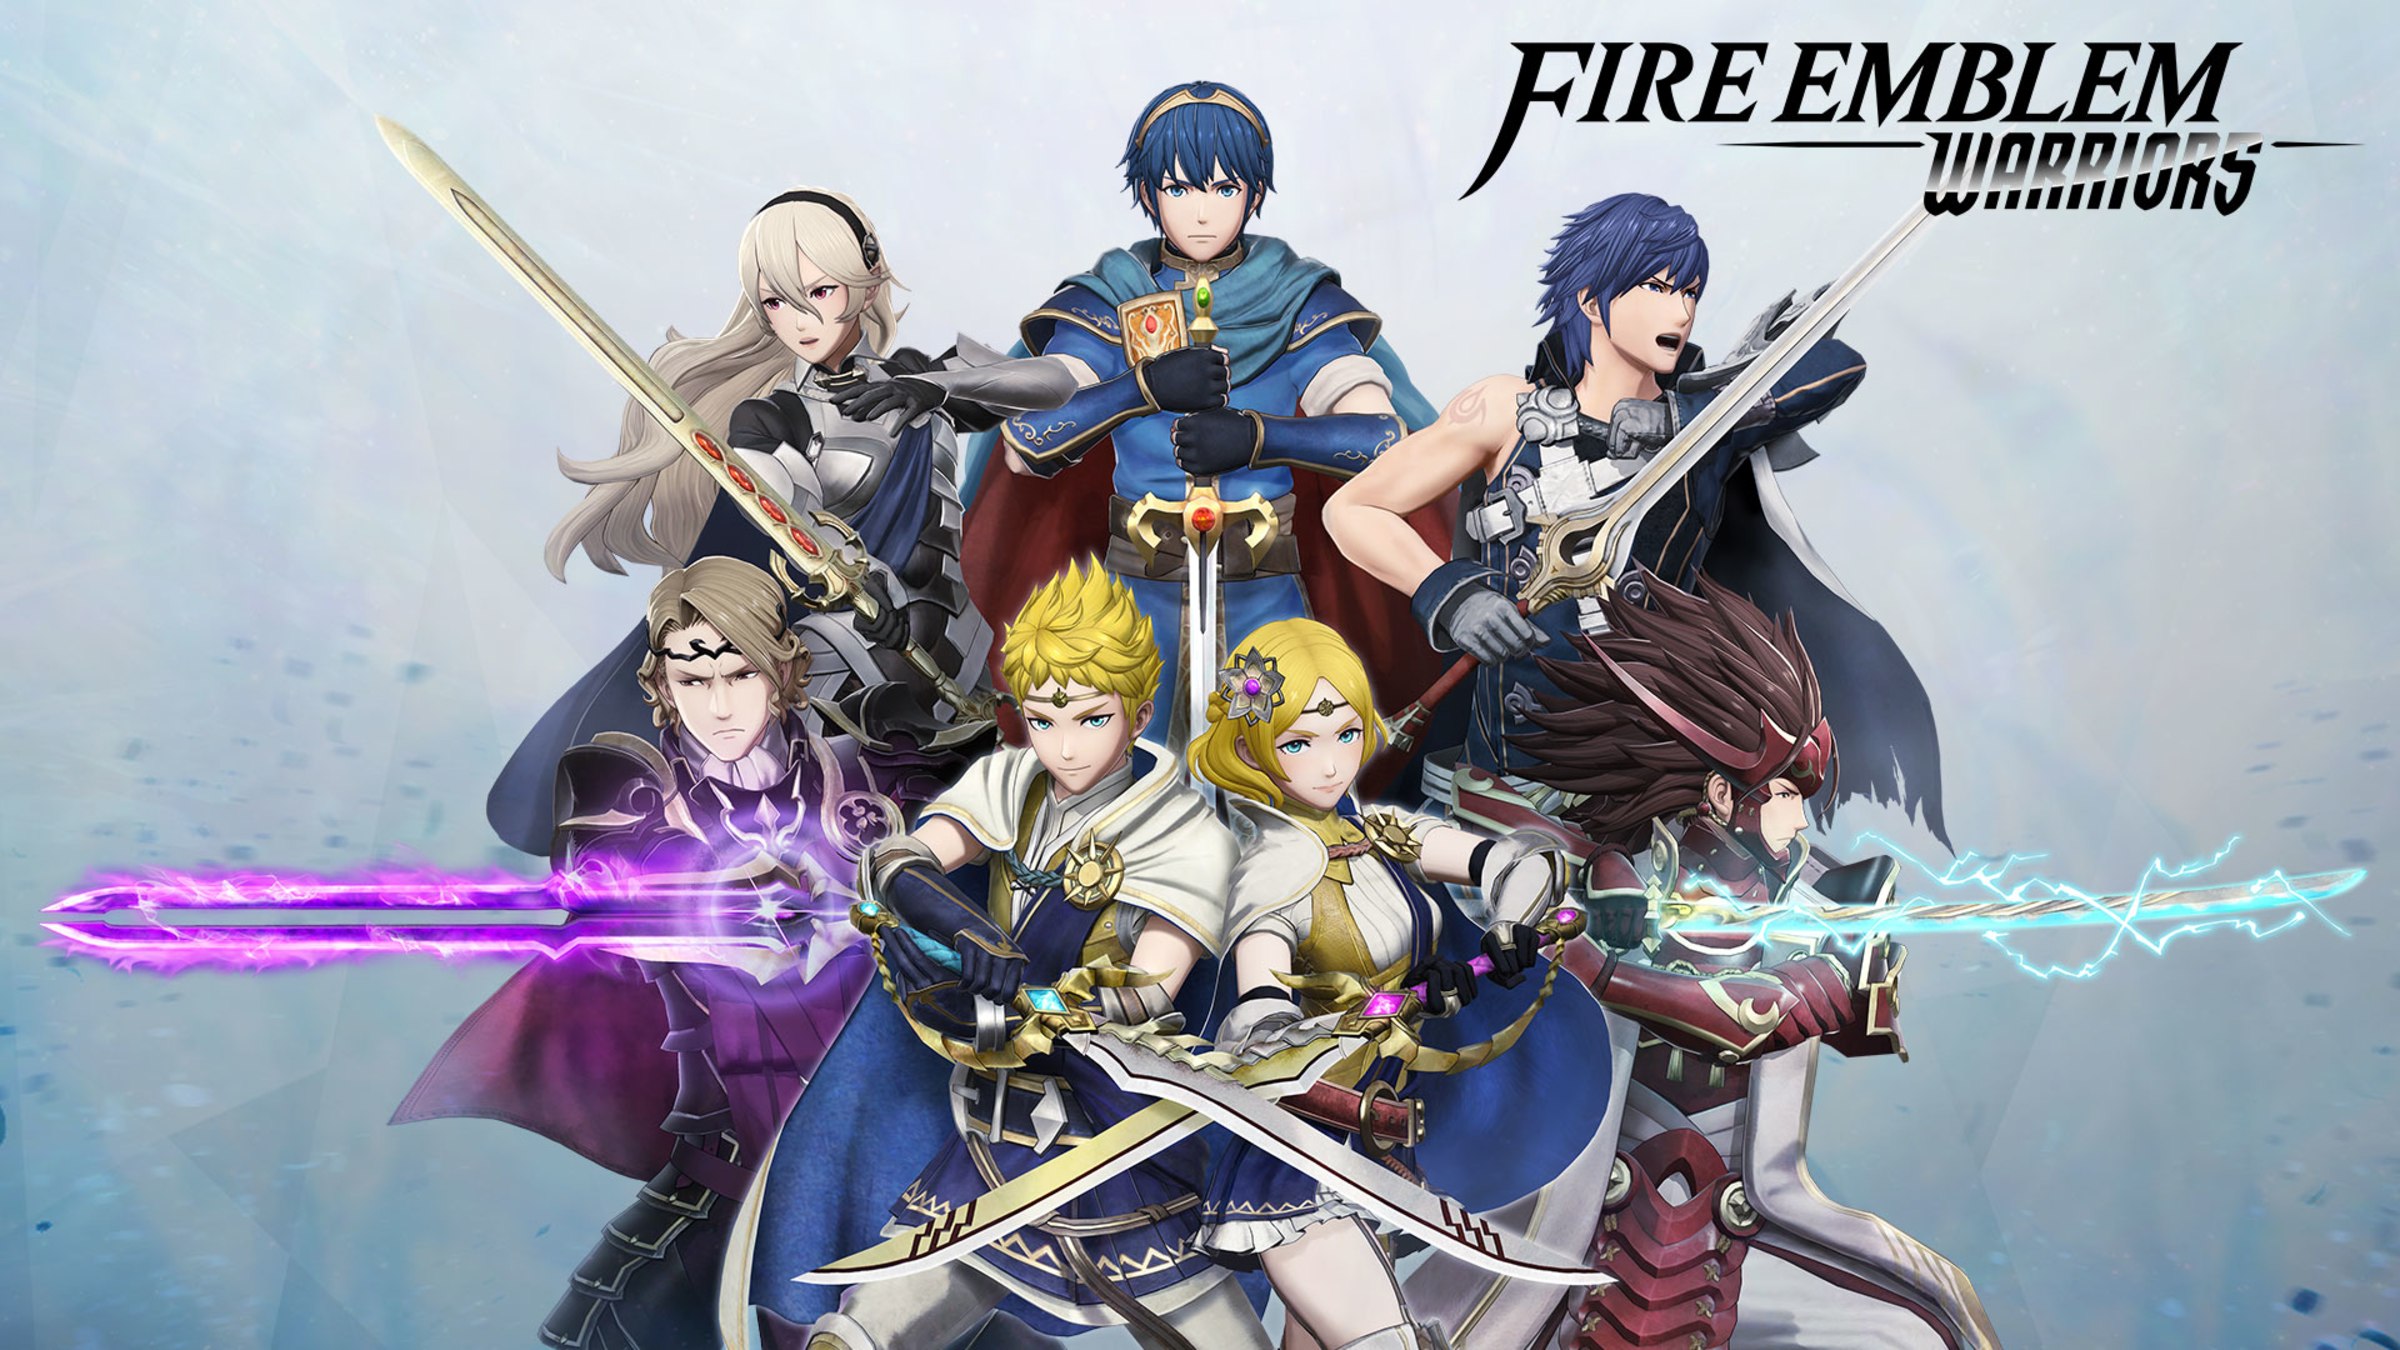 Fire Emblem™ Engage for Nintendo Switch - Nintendo Official Site